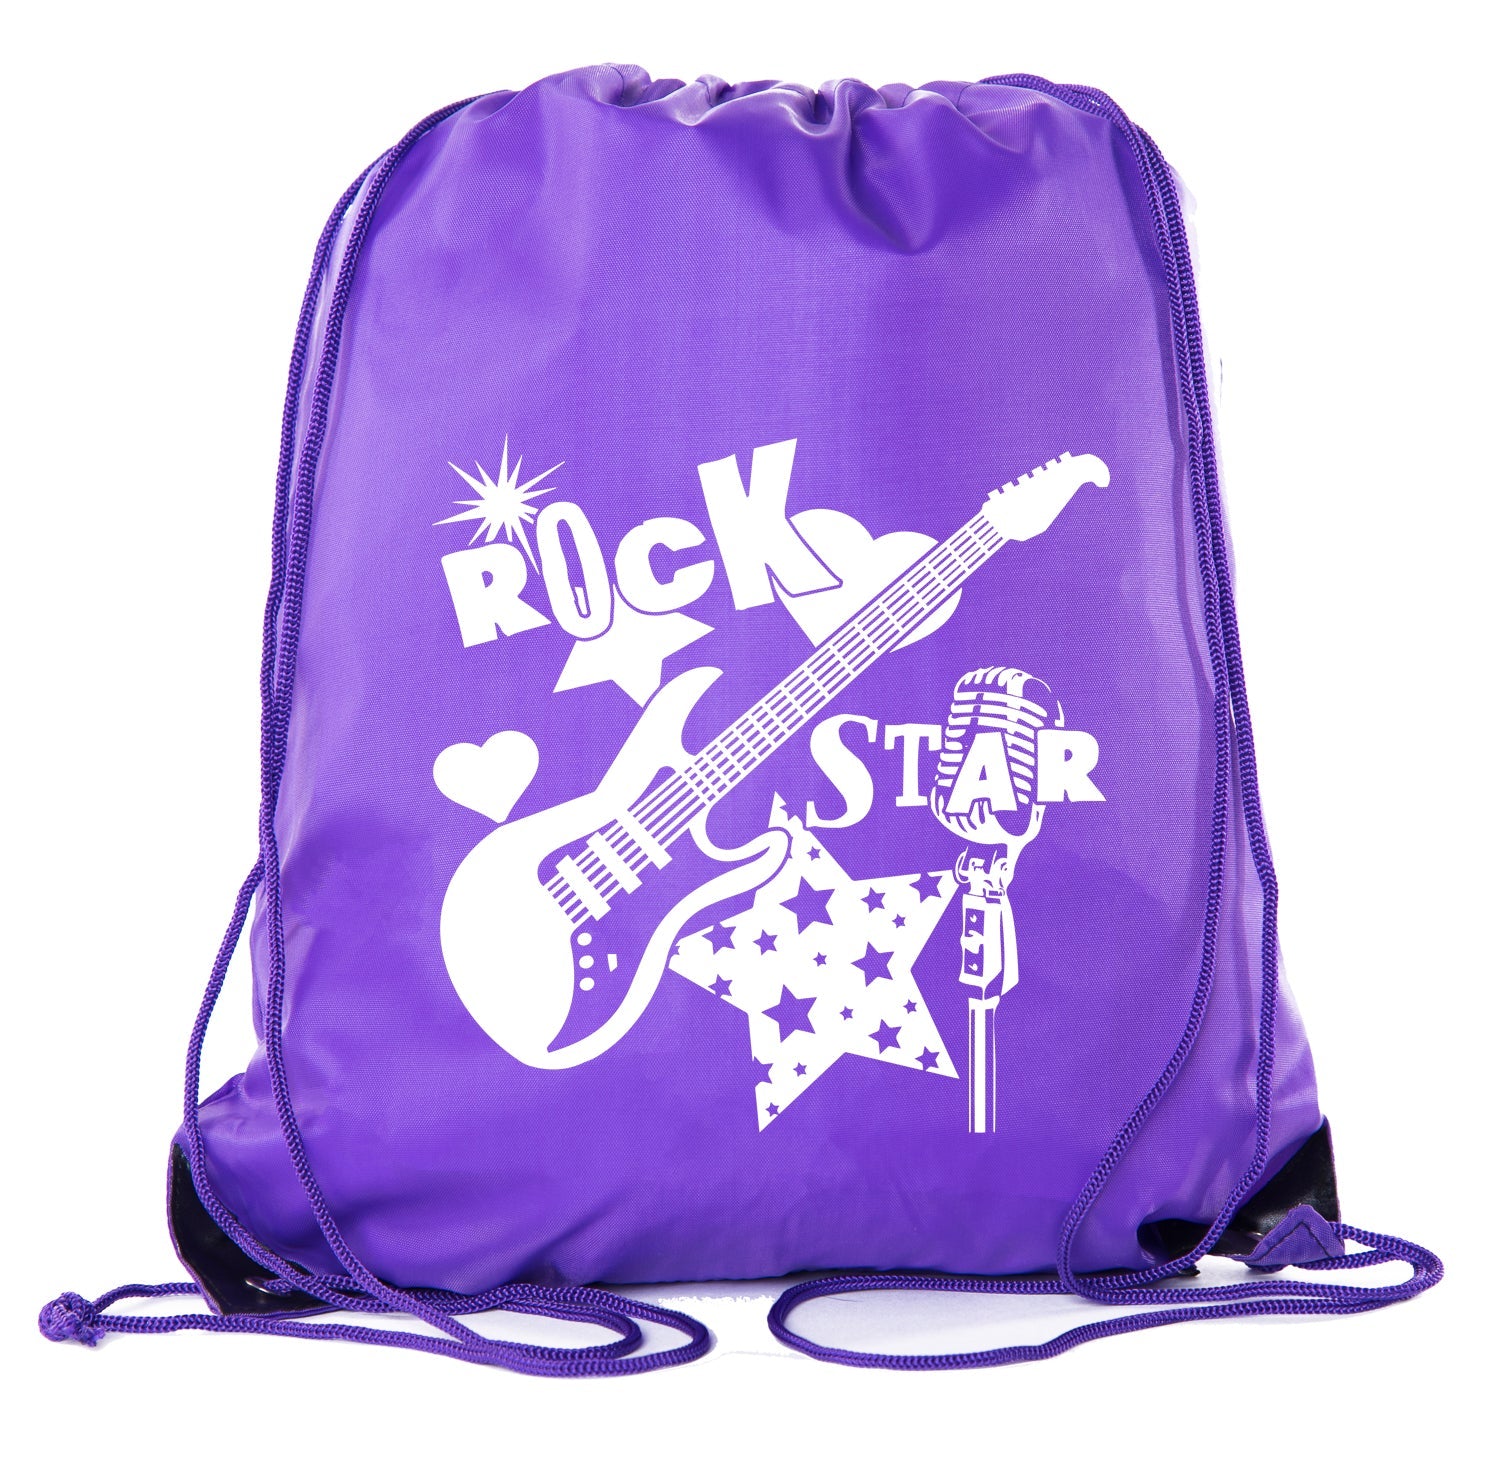 Rock Star Guitar & Microphone Polyester Drawstring Bag - Mato & Hash